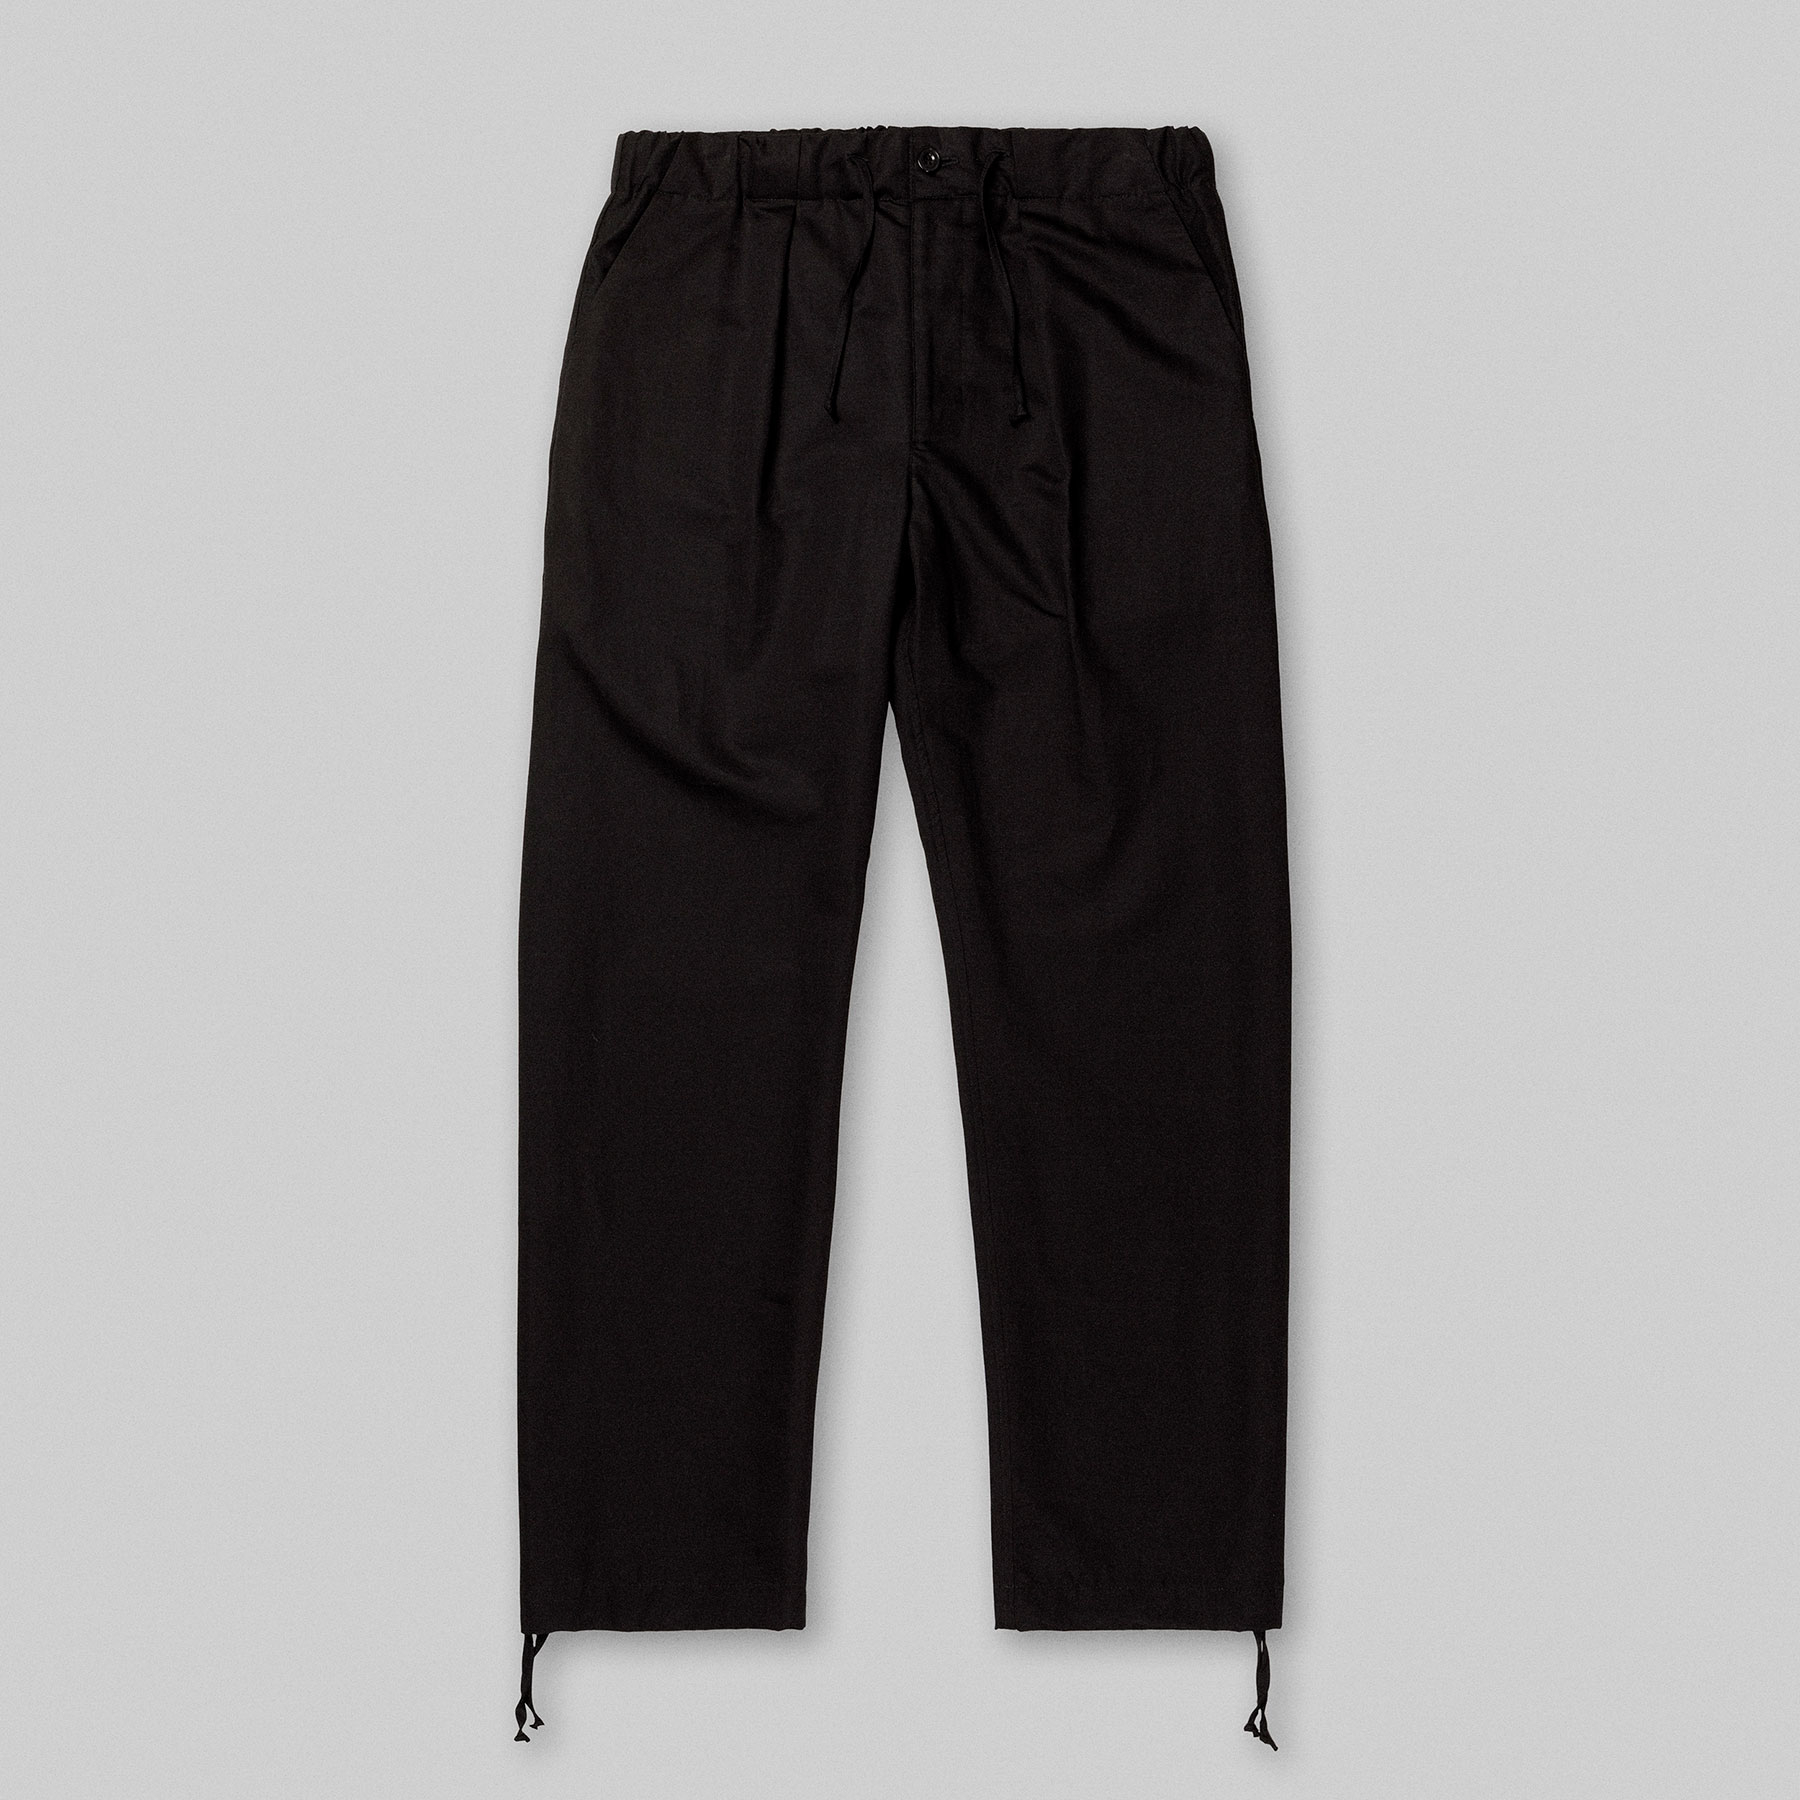 TERRA pants by Arpenteur in Black taffetas color